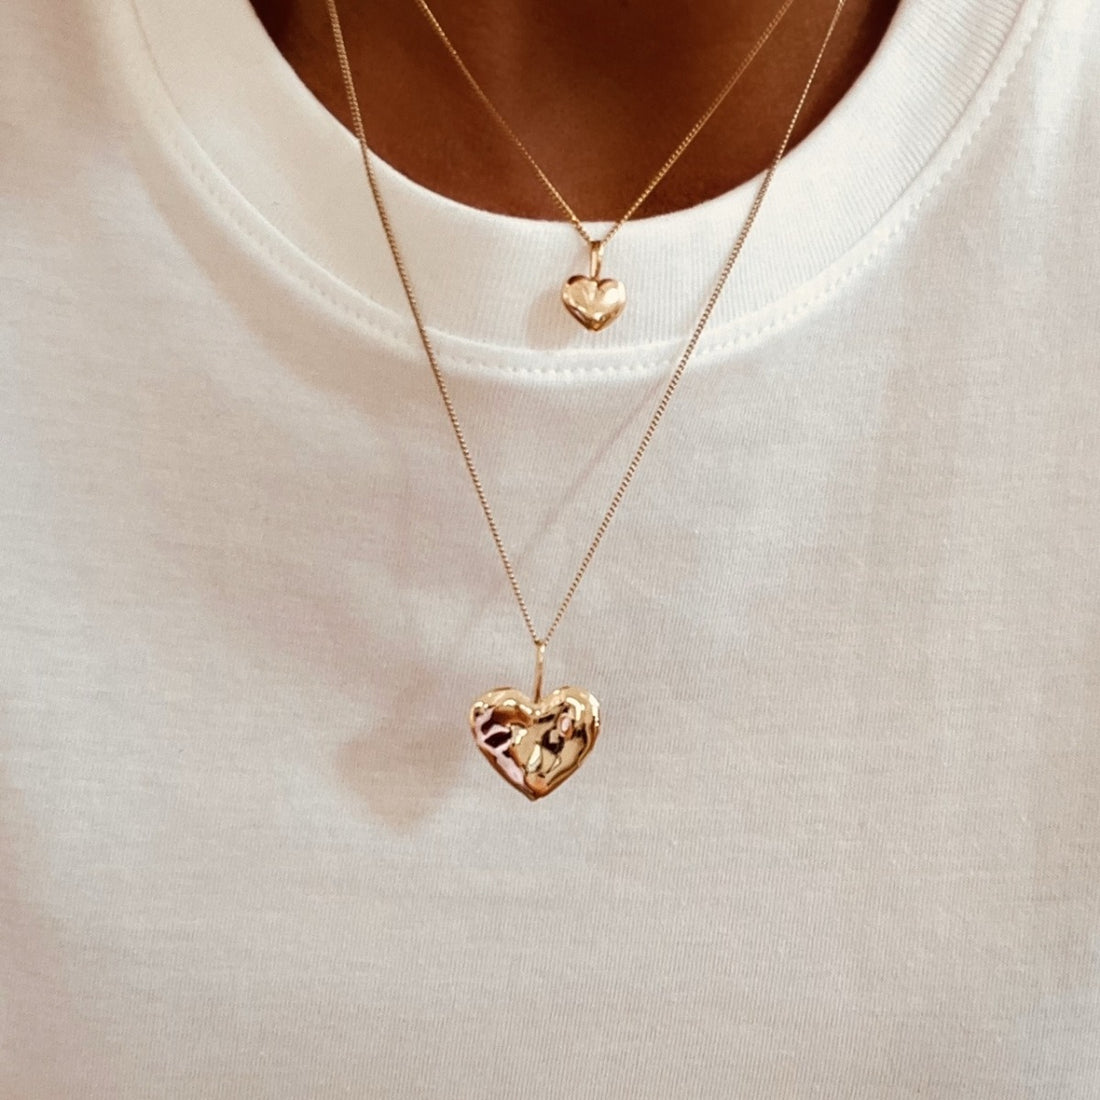 organic-heart-necklace-gold-emma-israelsson